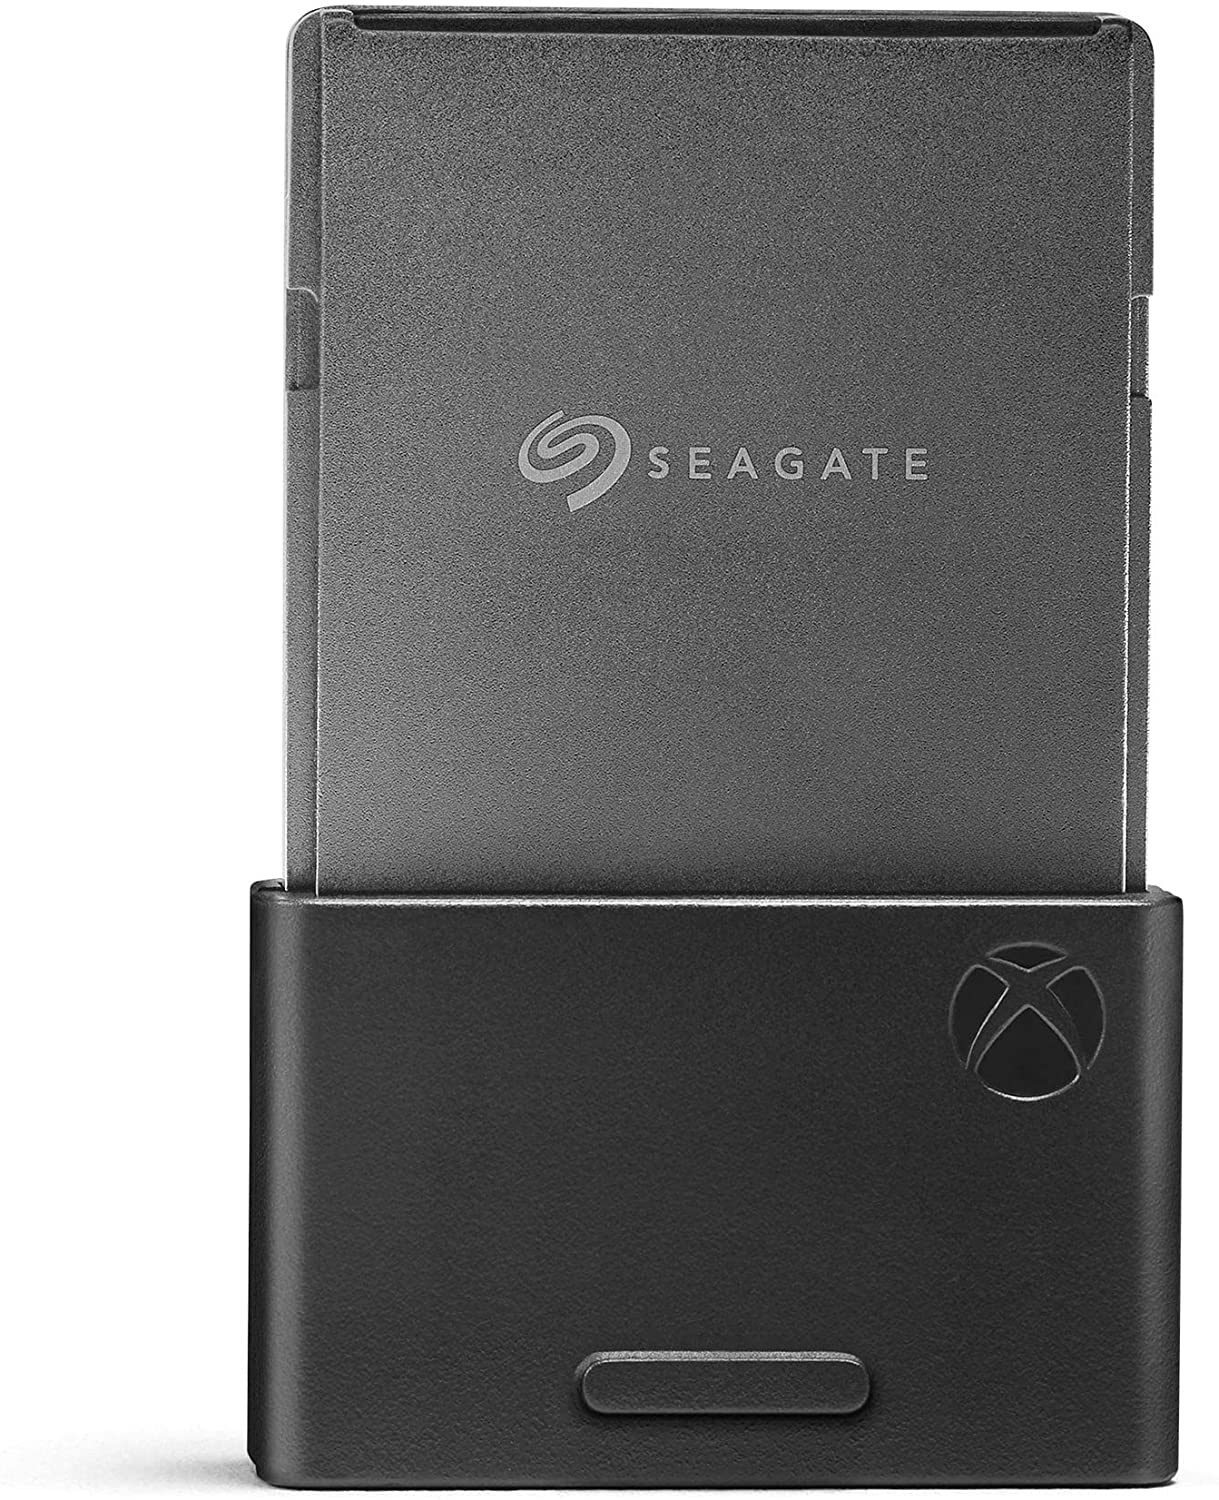 Накопитель SSD Seagate Original PCI-E 512GB STJR512400 Expansion 2.5" черный